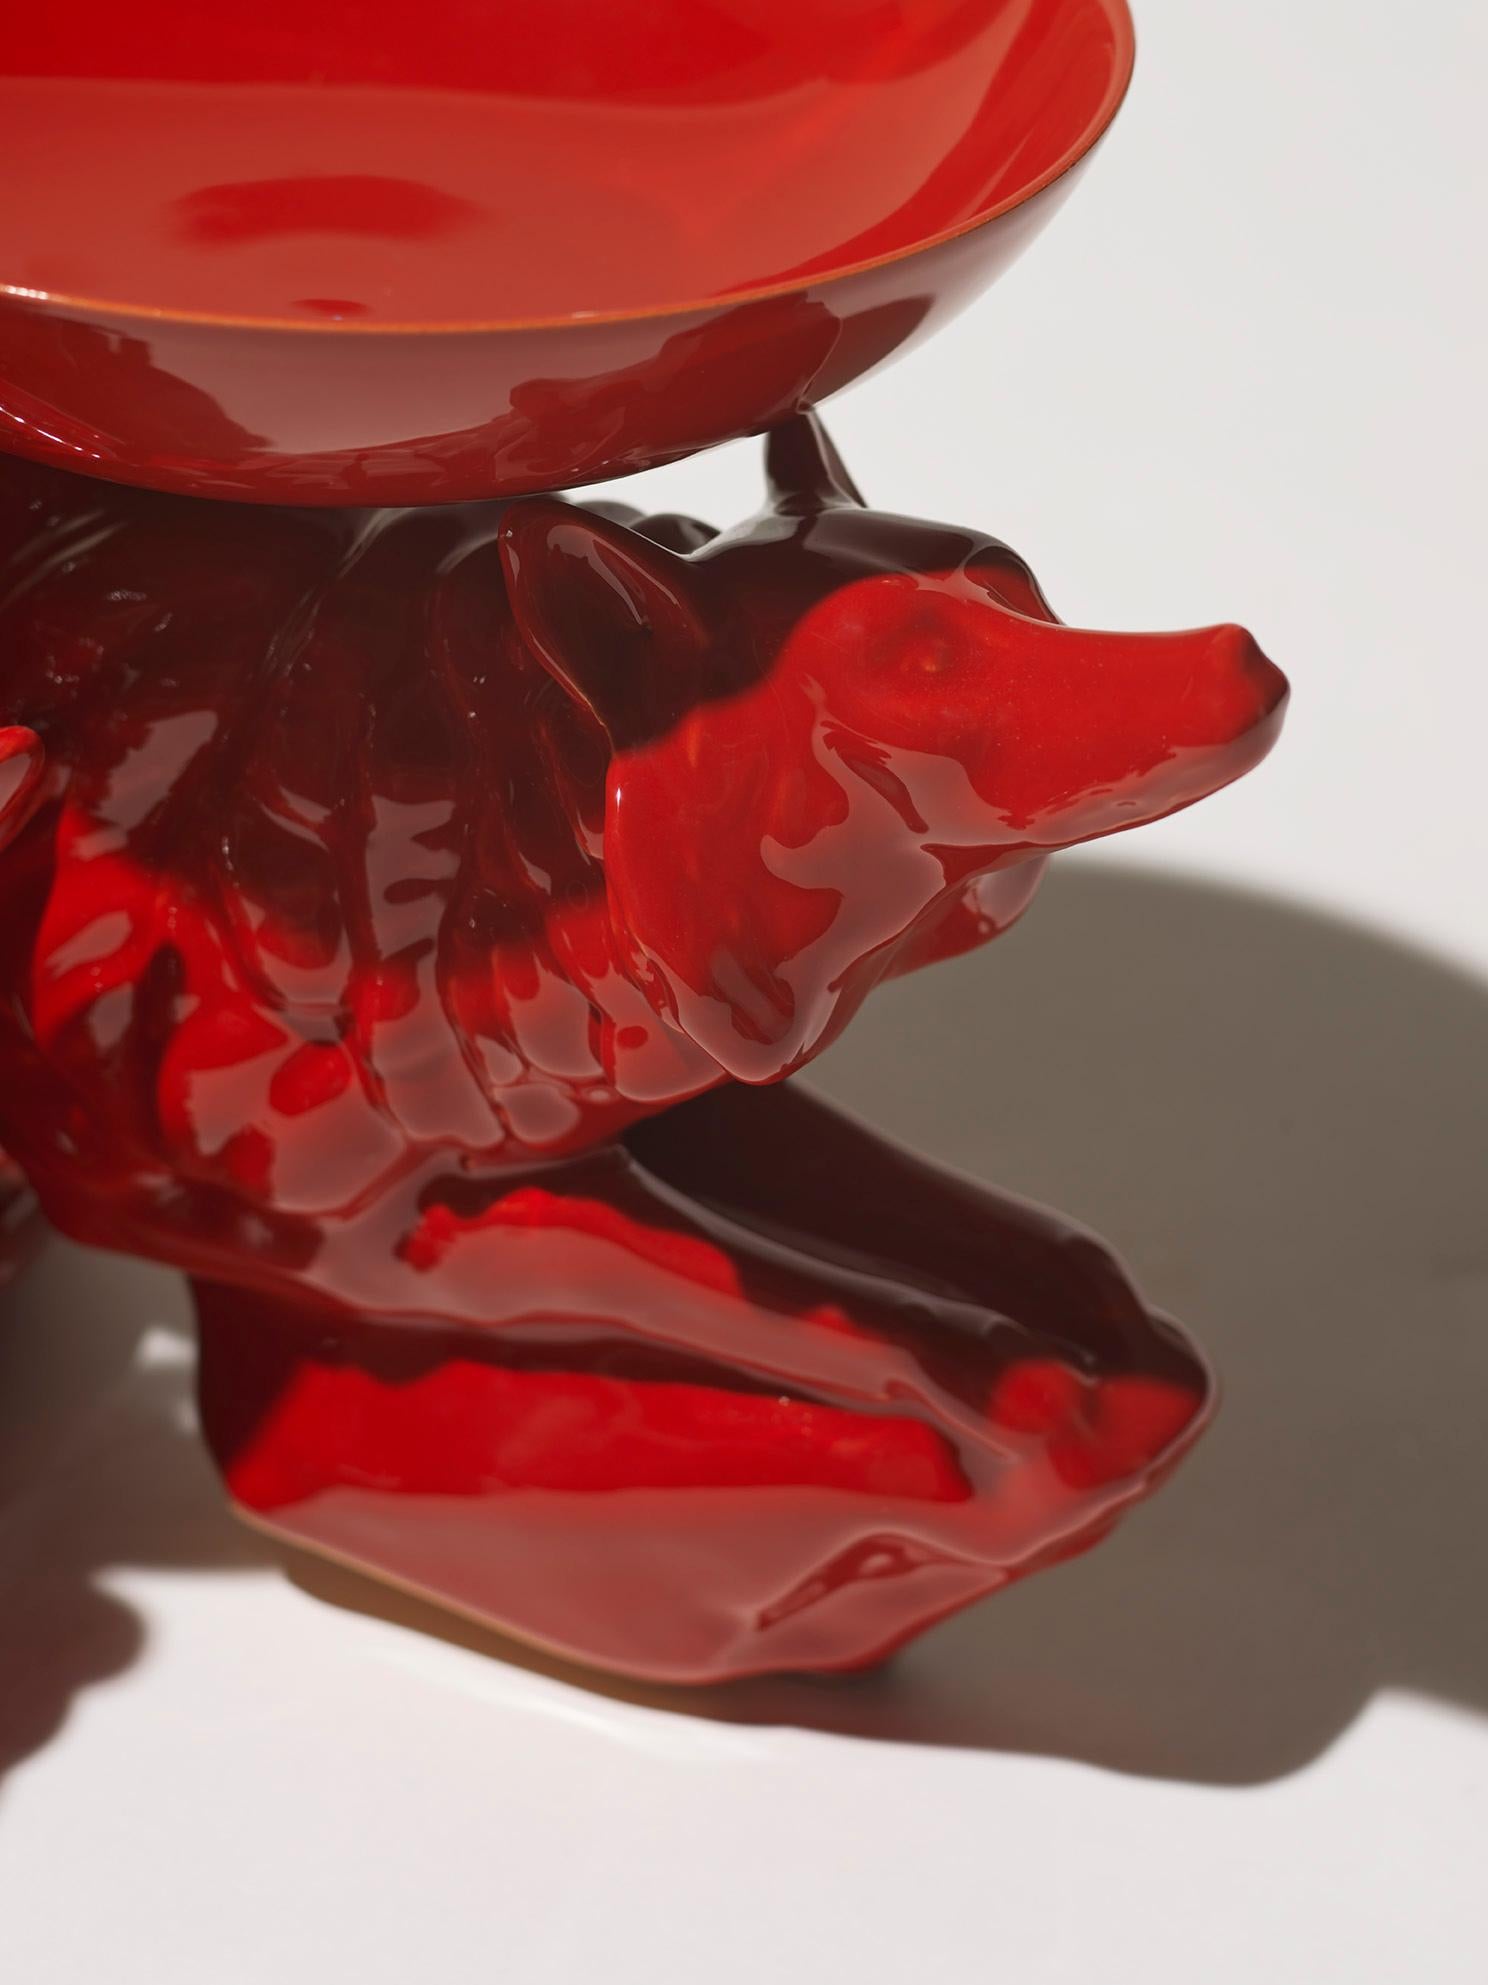 Enameled 21st Century Italy Red Fox Sculpture Ceramica Gatti designer A. Anastasio For Sale